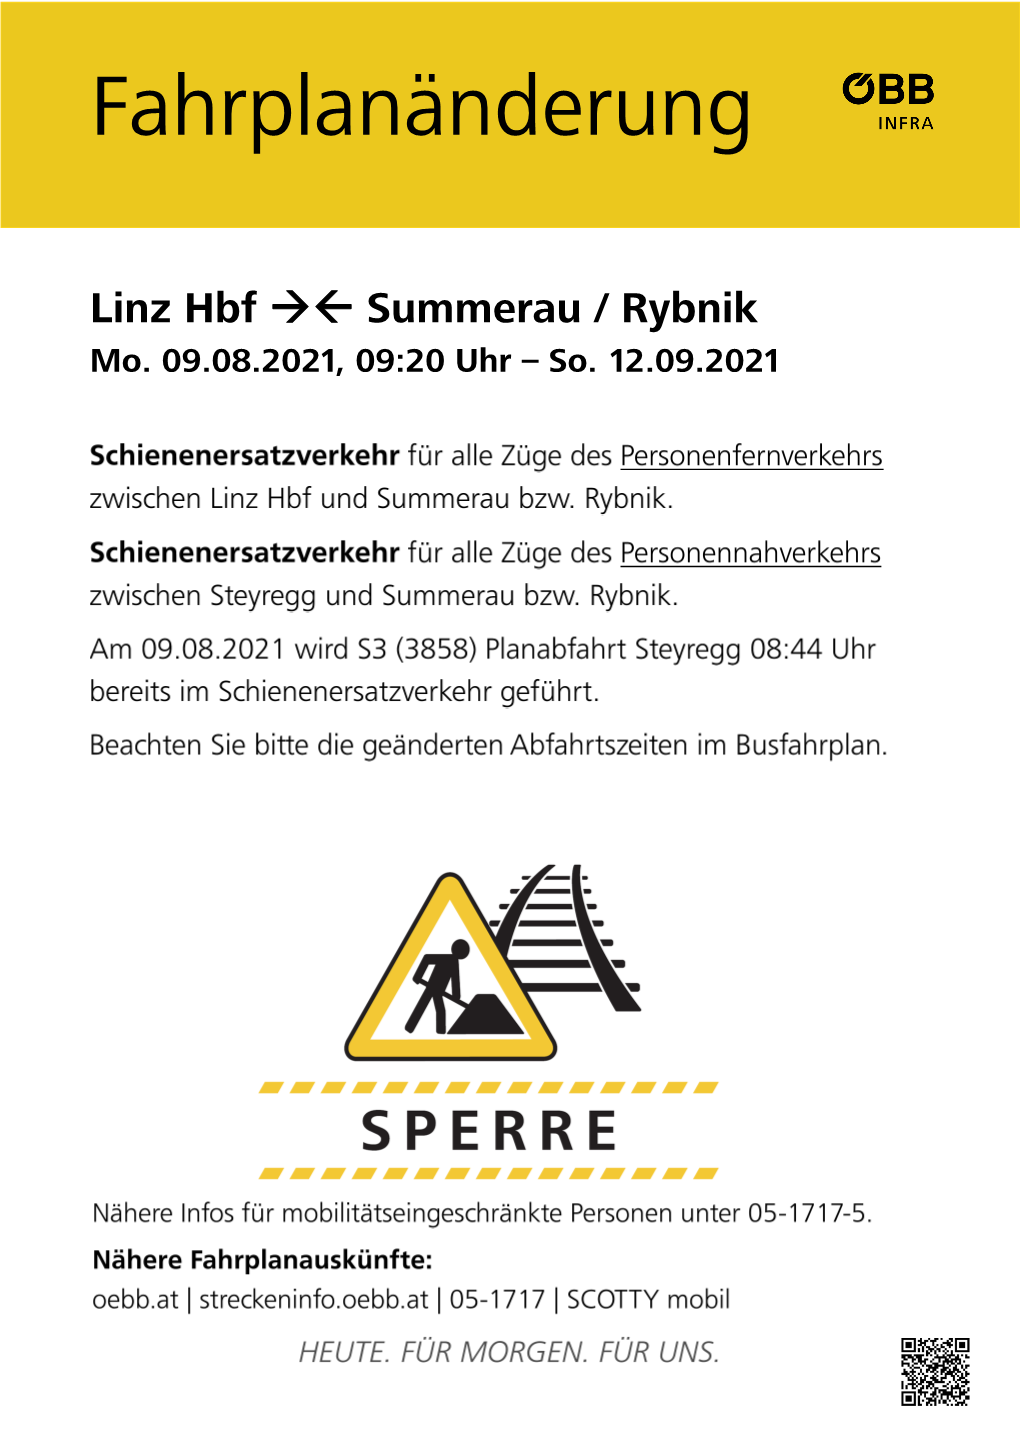 Linz Hbf →← Summerau / Rybnik